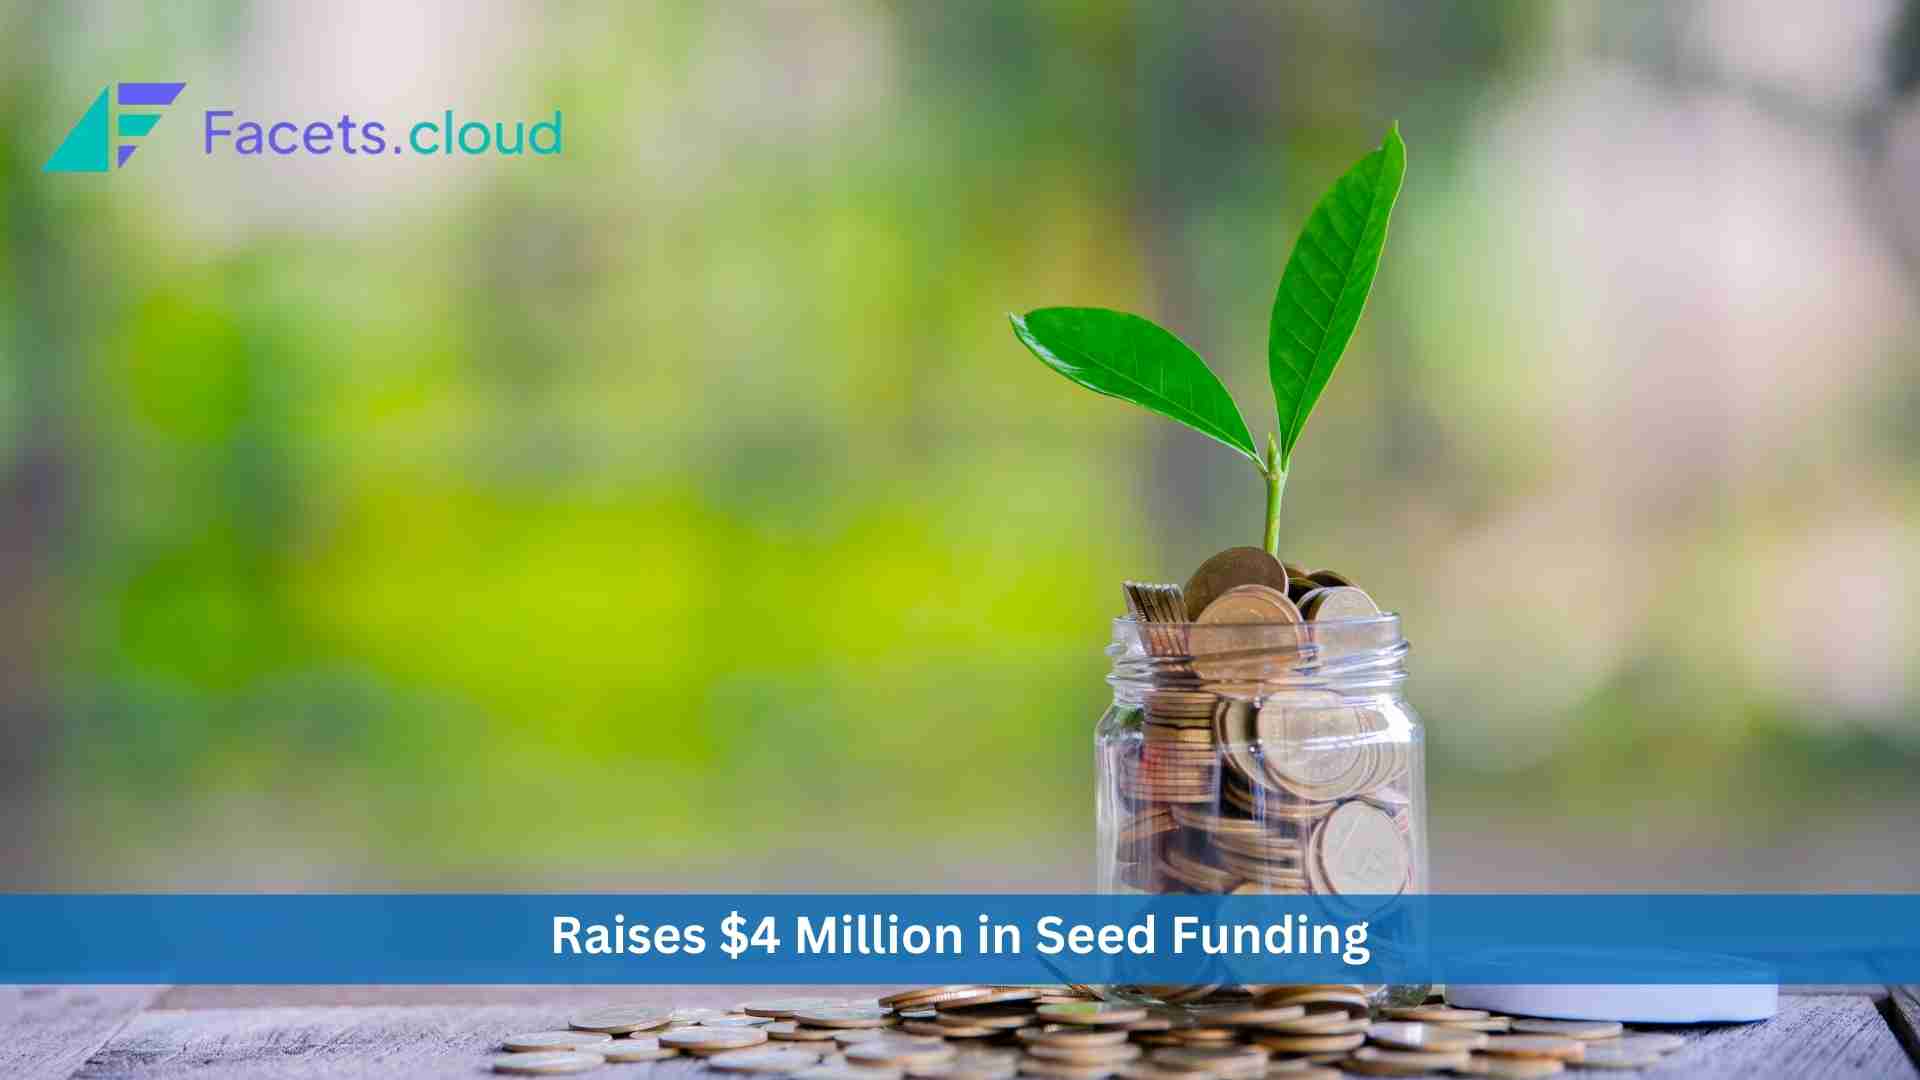 Facets.cloud Raises $4 Million in Seed Funding to Revolutionize DevOps